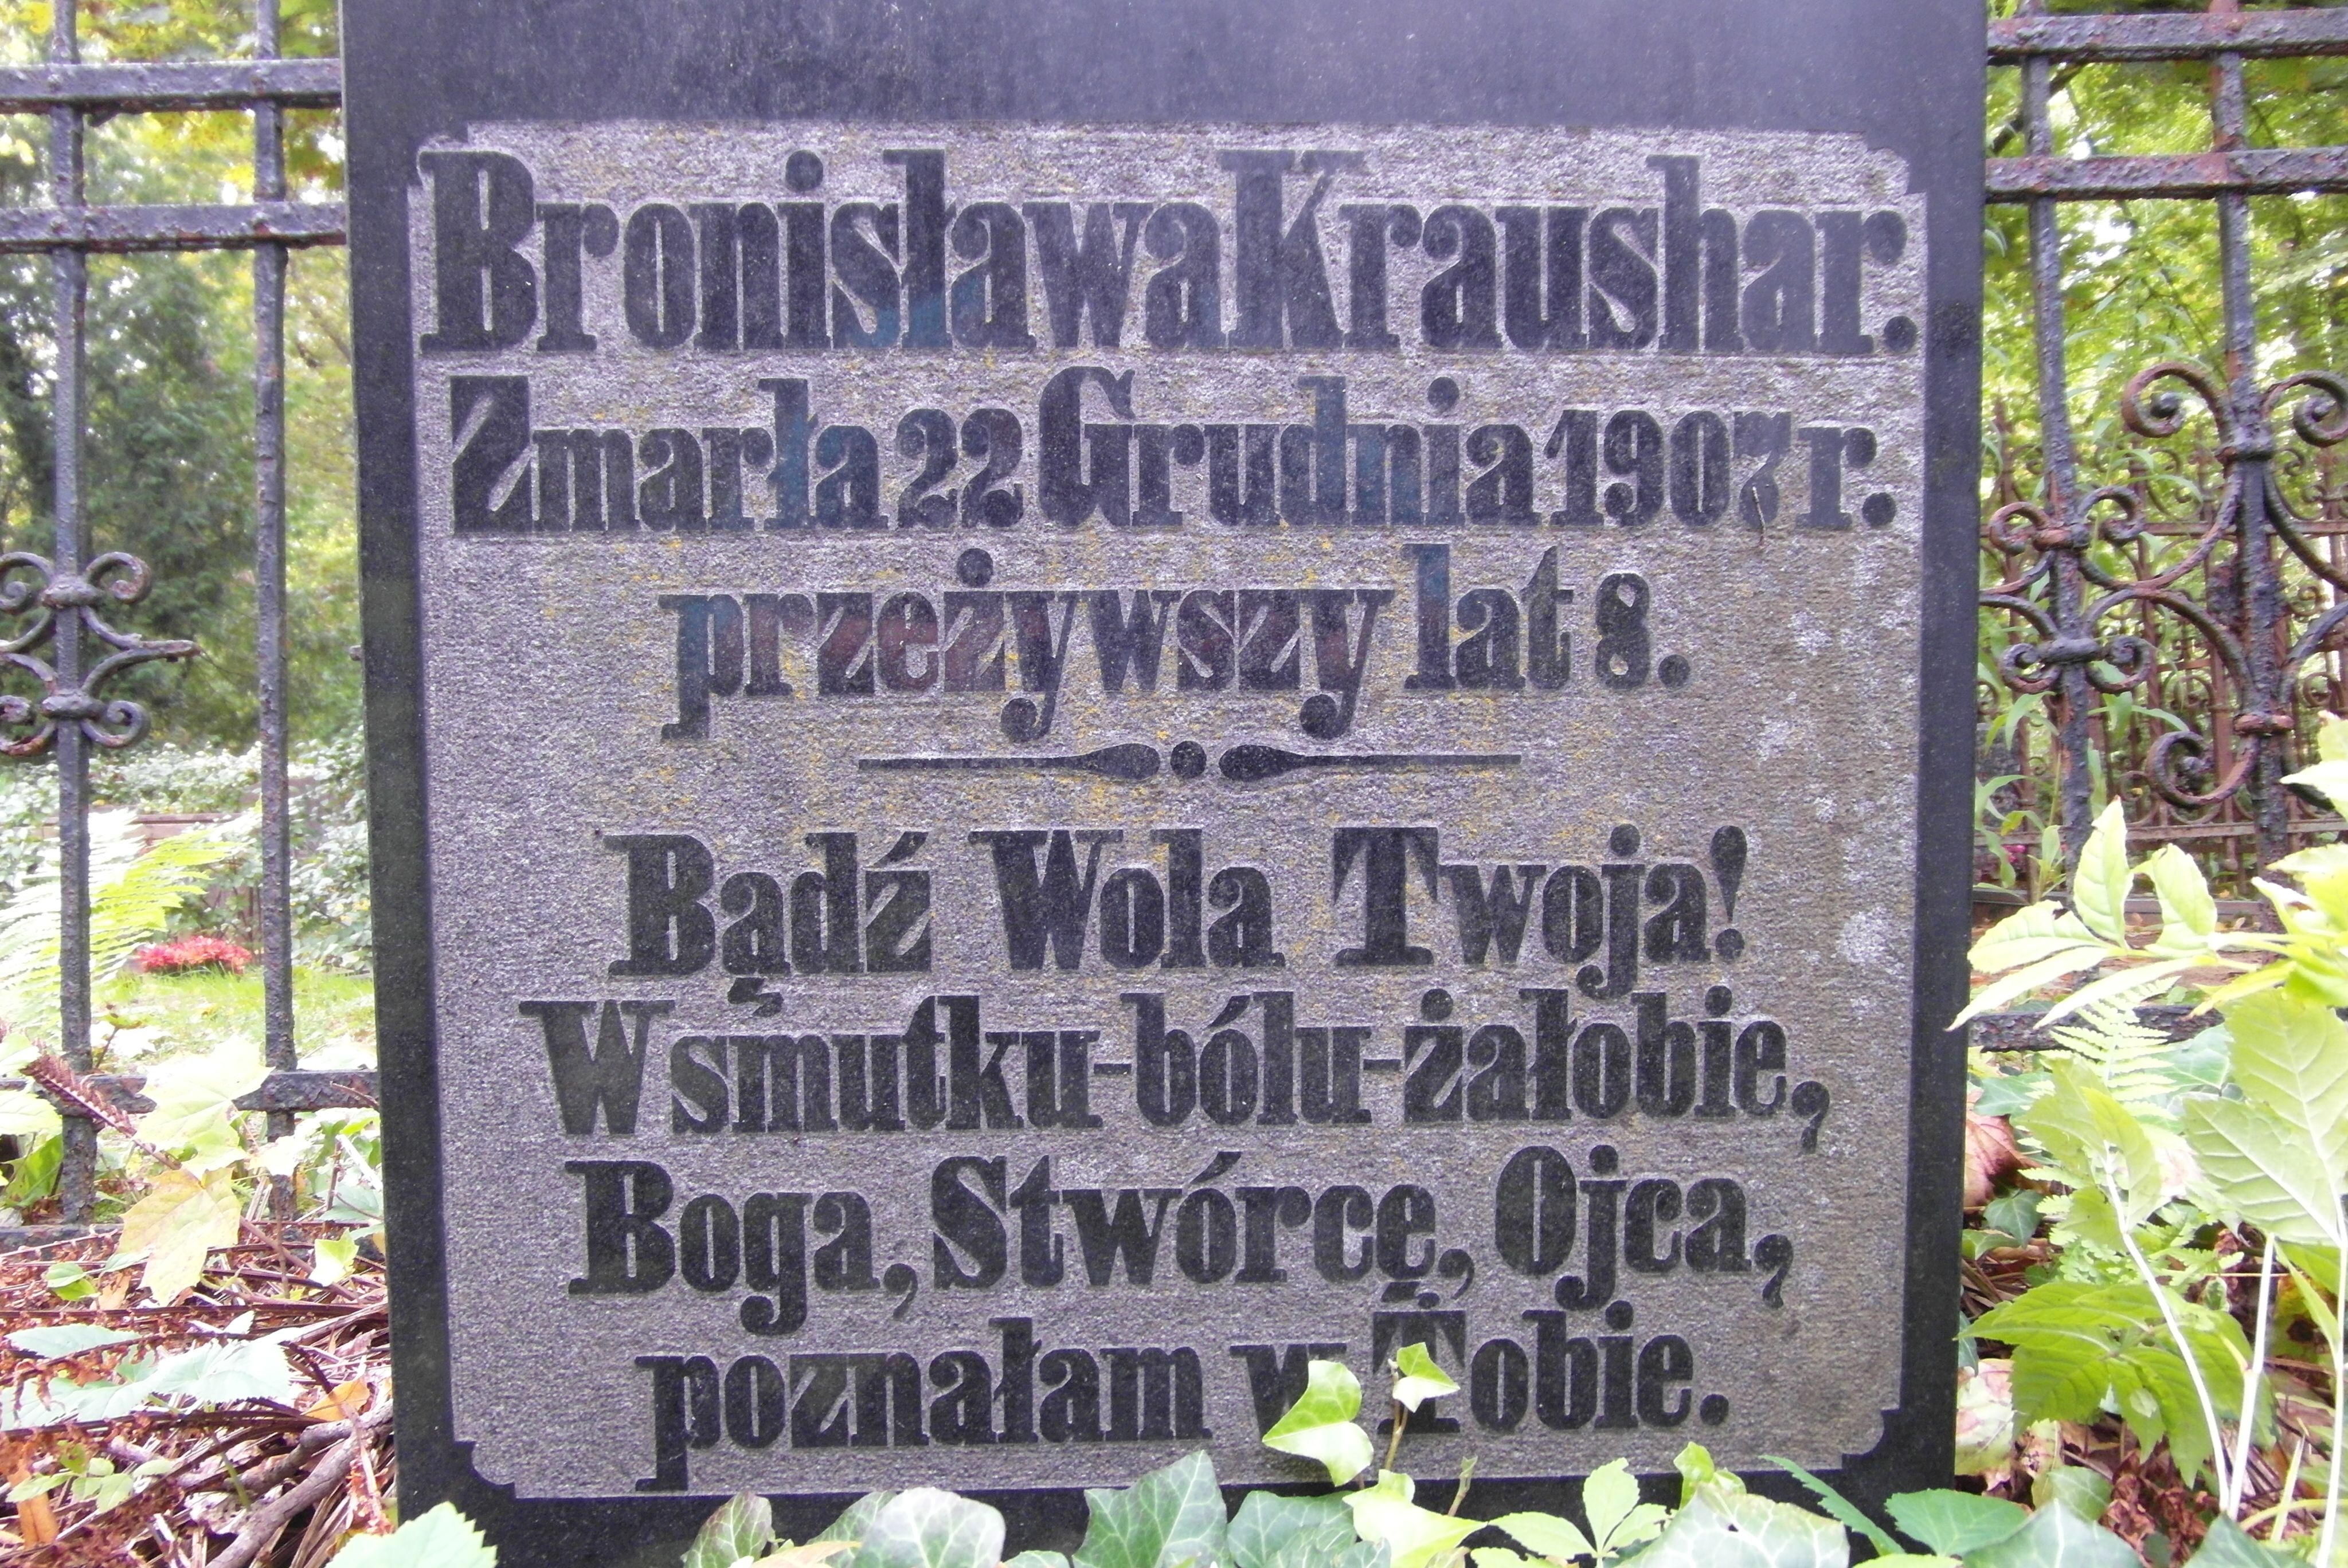 Inscription from the gravestone of Bronislava Kraushar, St Michael's cemetery in Riga, as of 2021.